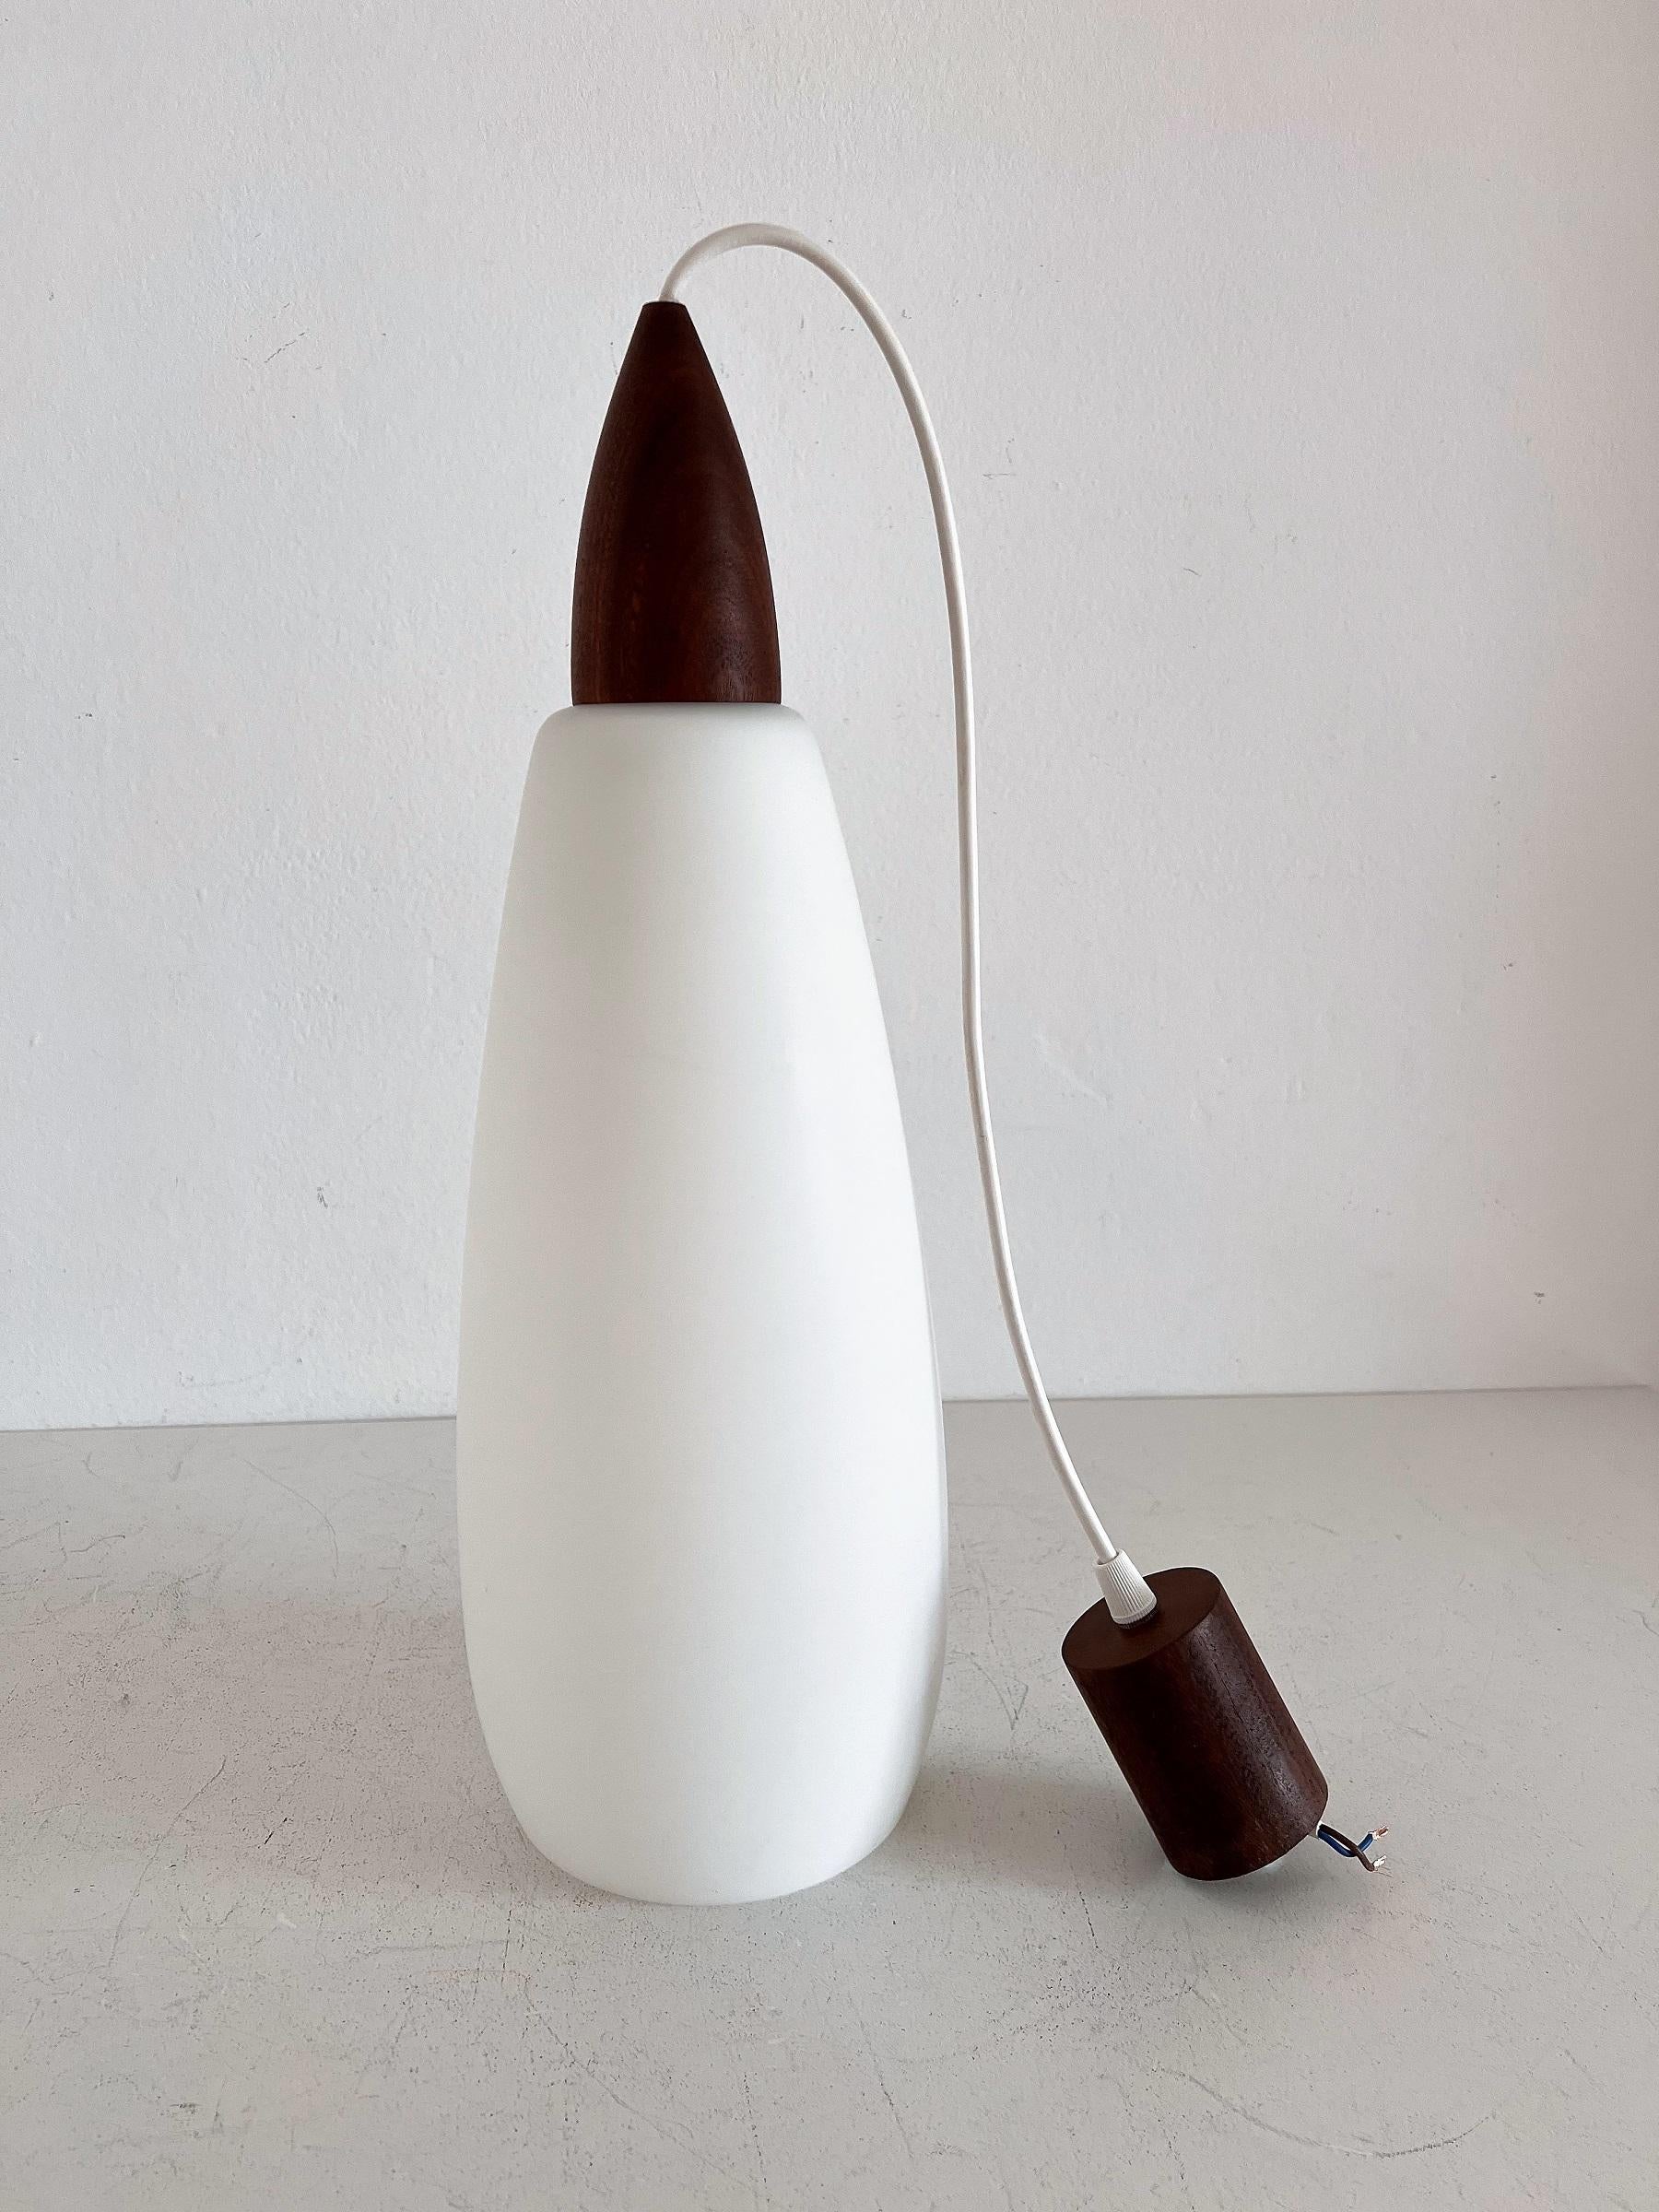 Italian Midcentury Nordic Style Pendant in Teak and Milk Glass, 1960s For Sale 3